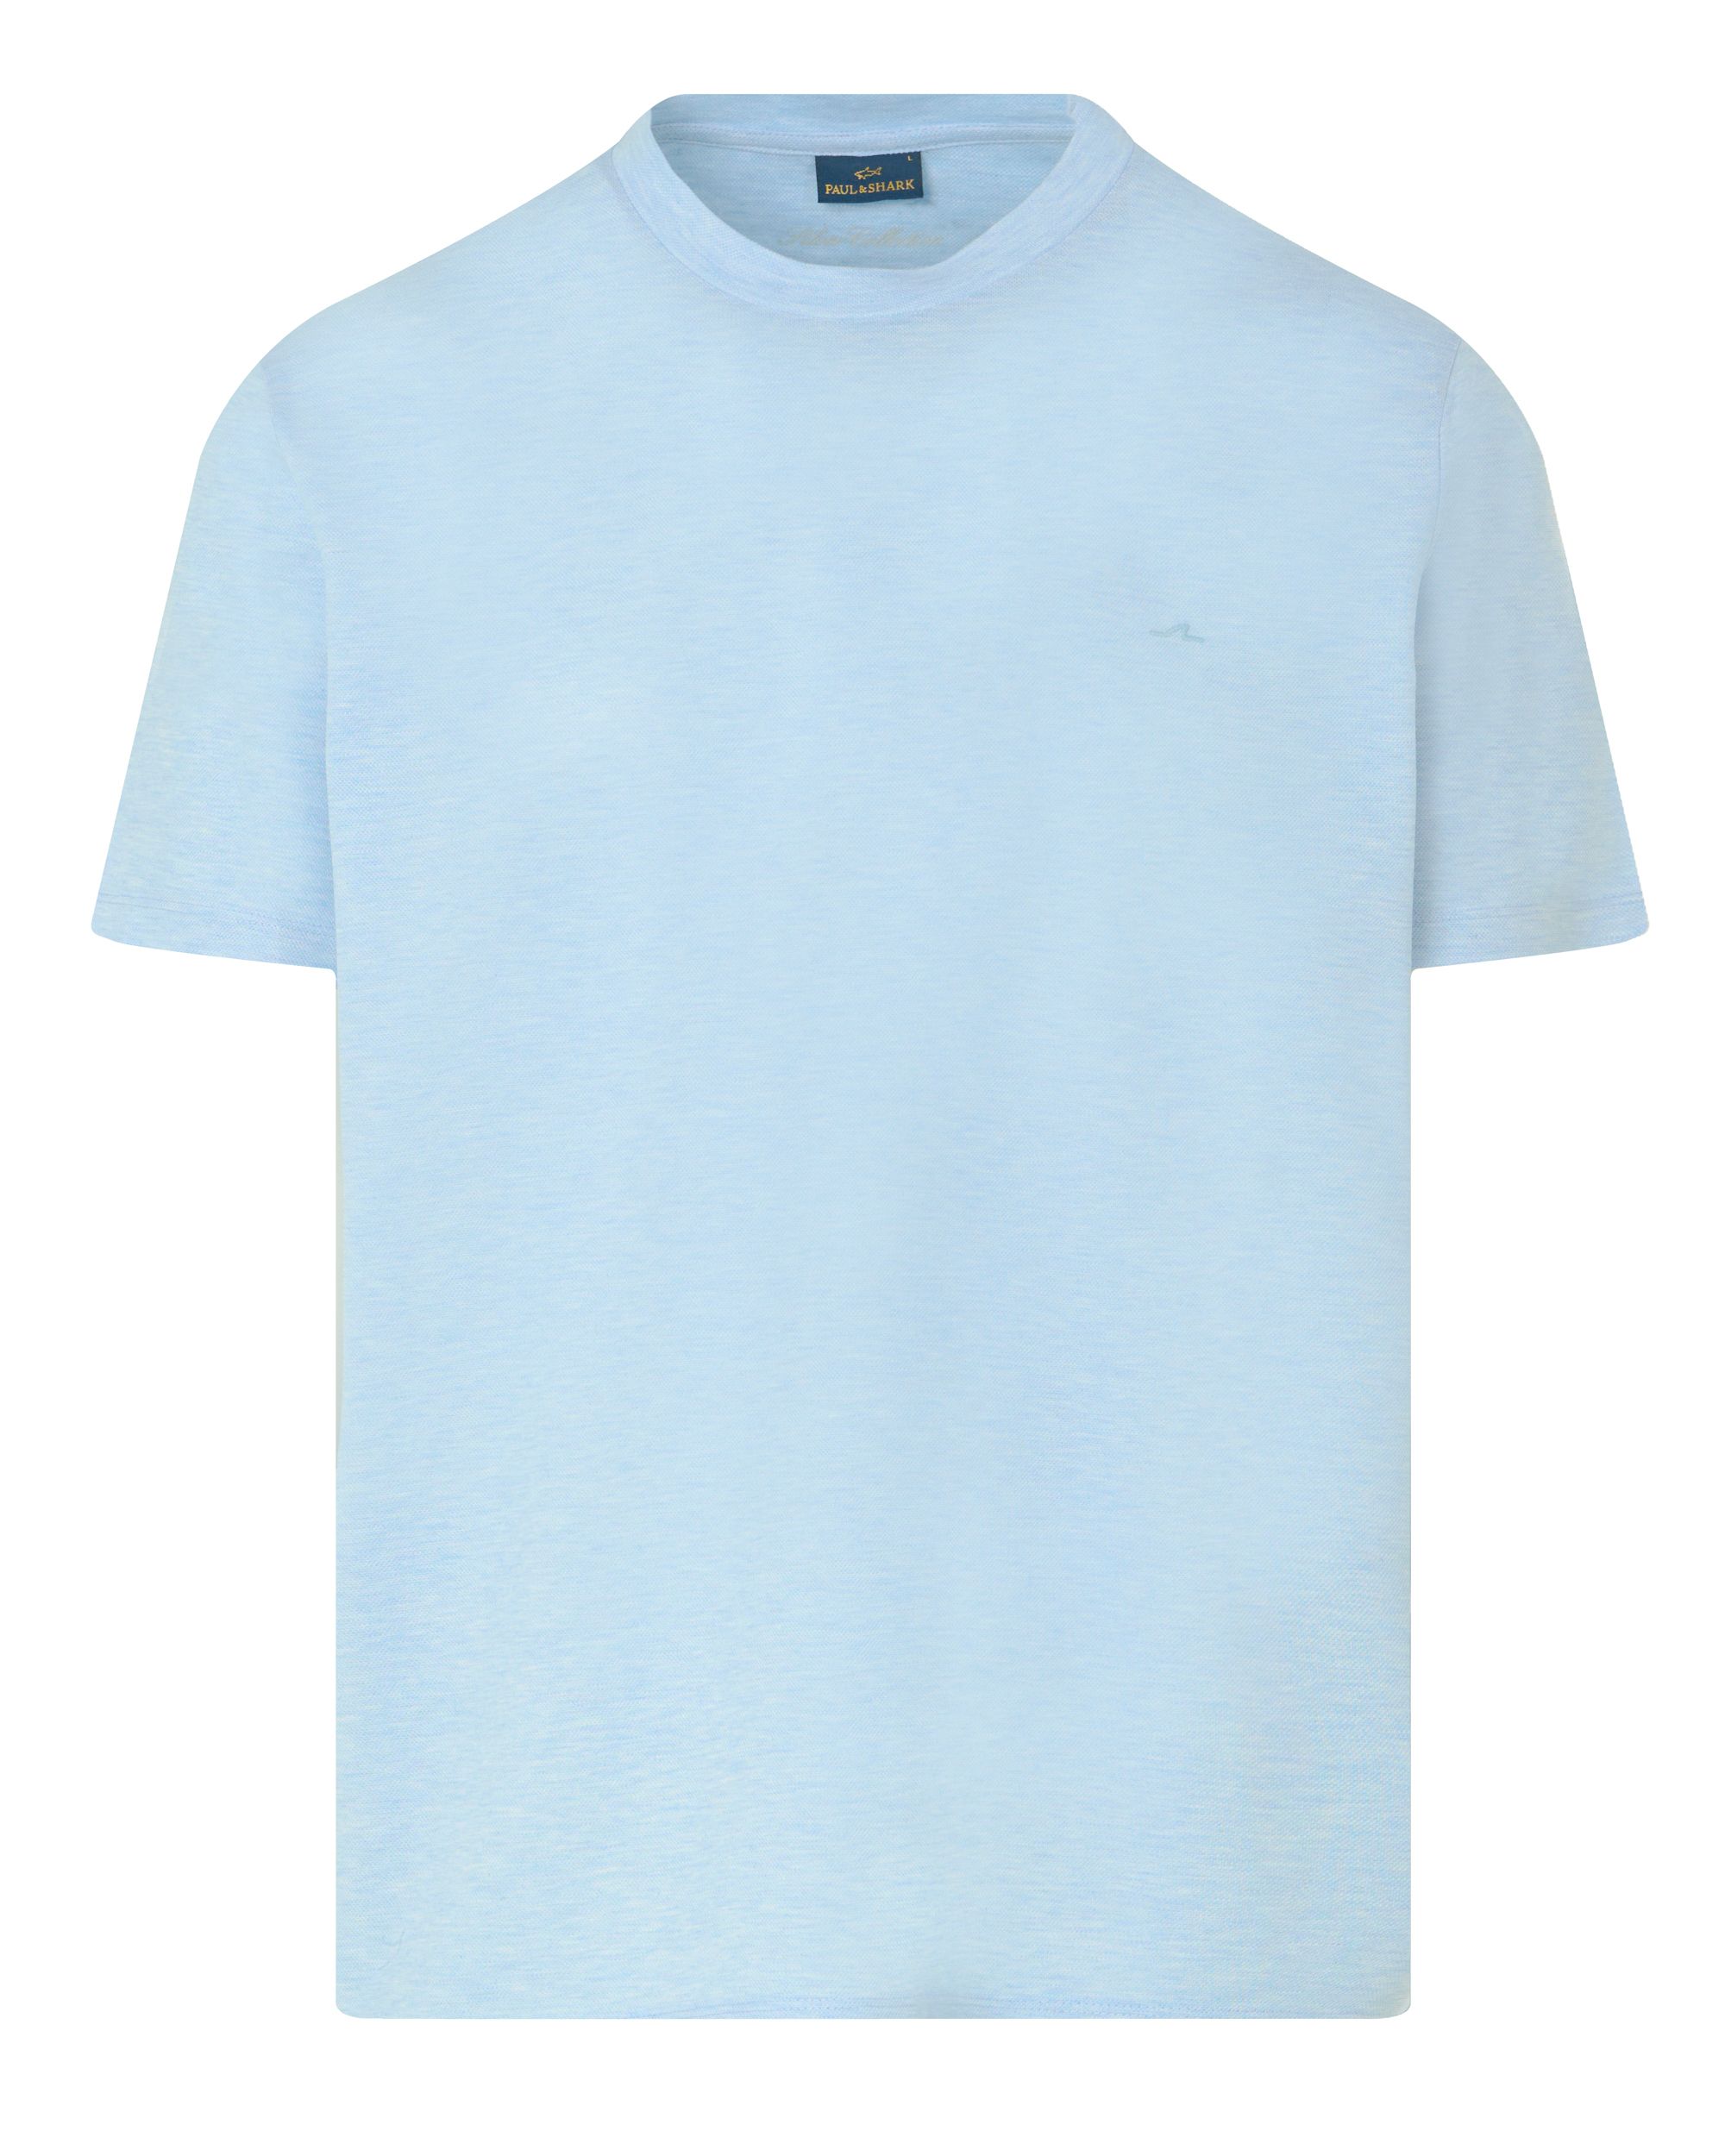 Paul & Shark T-shirt KM Blauw 092045-001-XXL